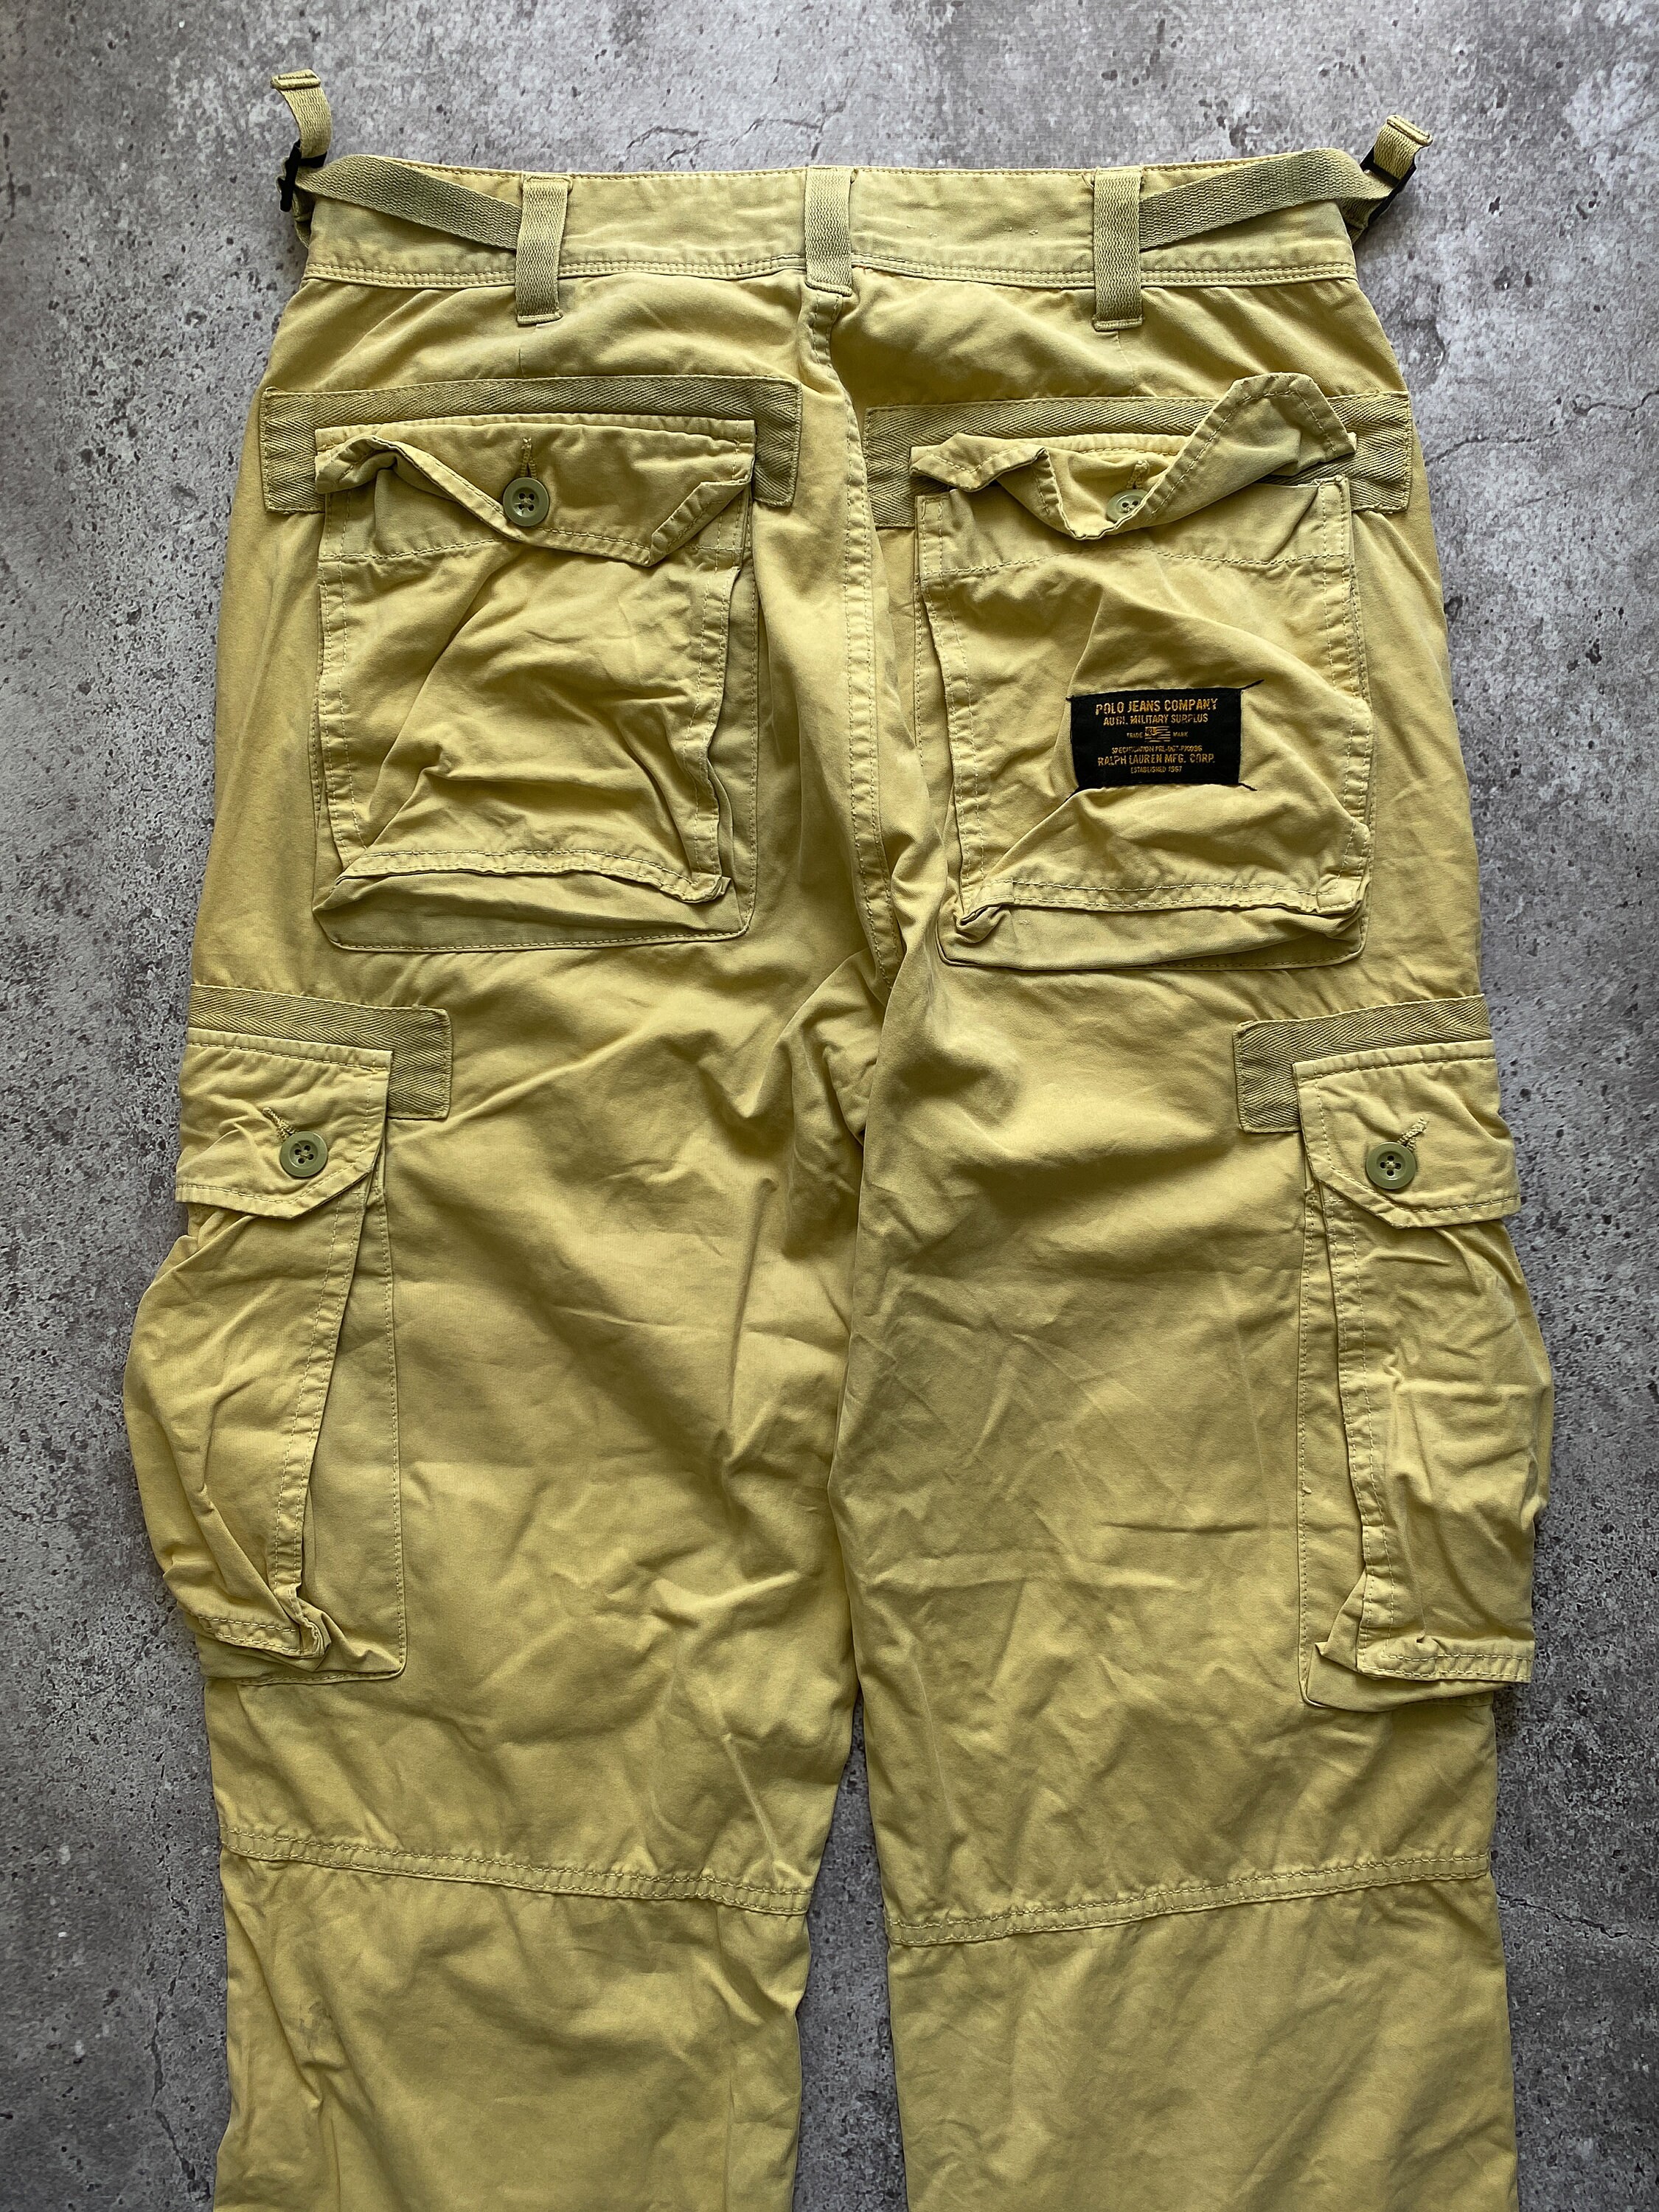 Polo Ralph Lauren Polo Jeans Co Ralph Lauren Cargo Shorts Y2K